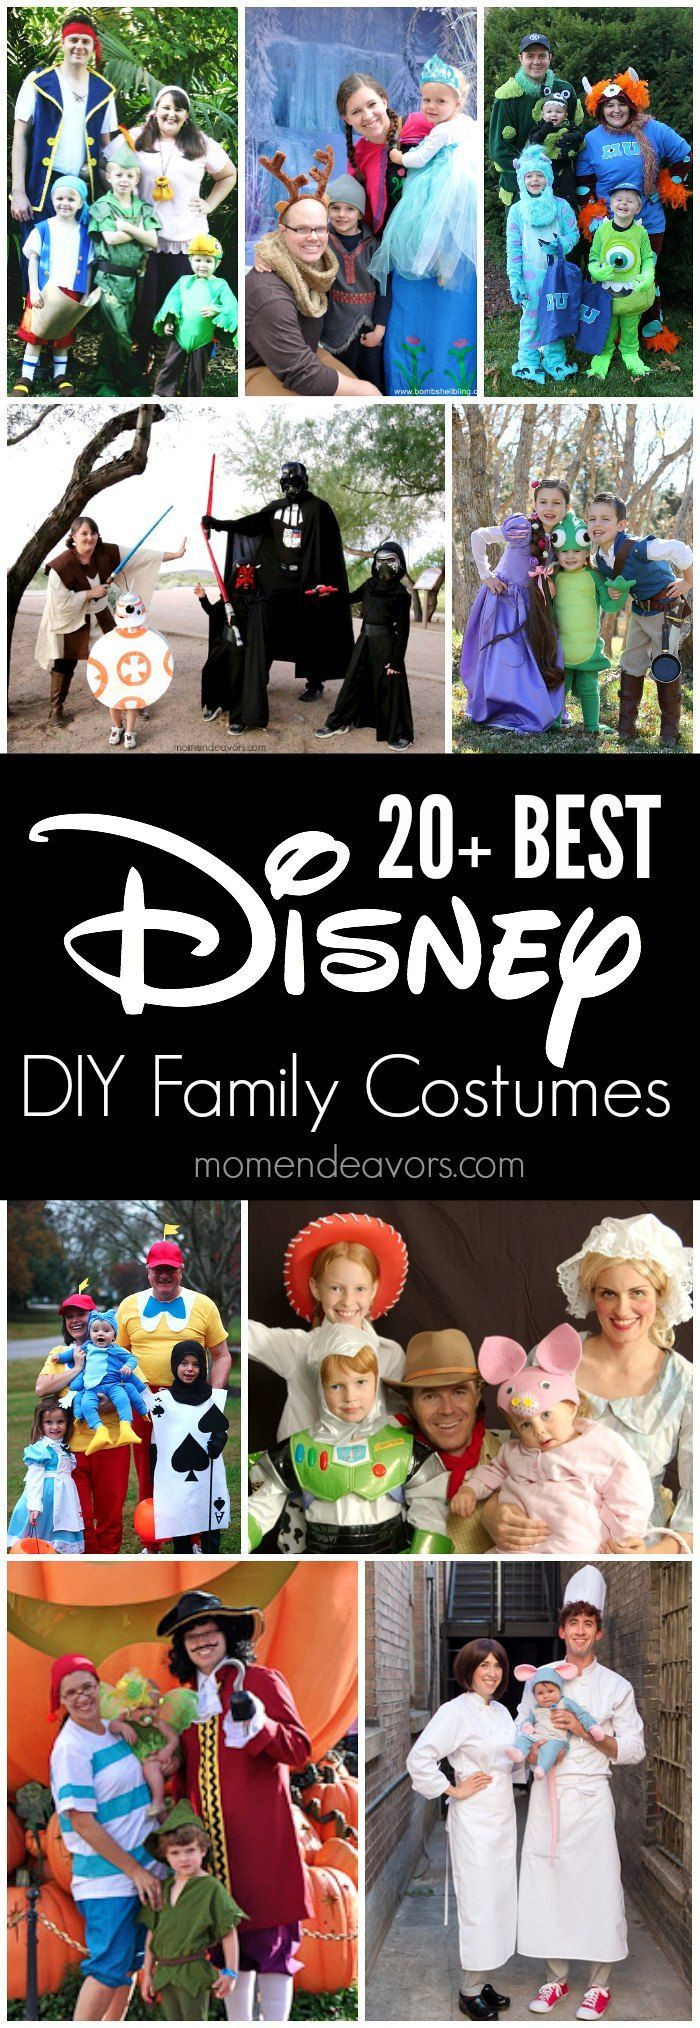 Disney Halloween Party Ideas
 20 BEST DIY Disney Family Themed Halloween Costumes